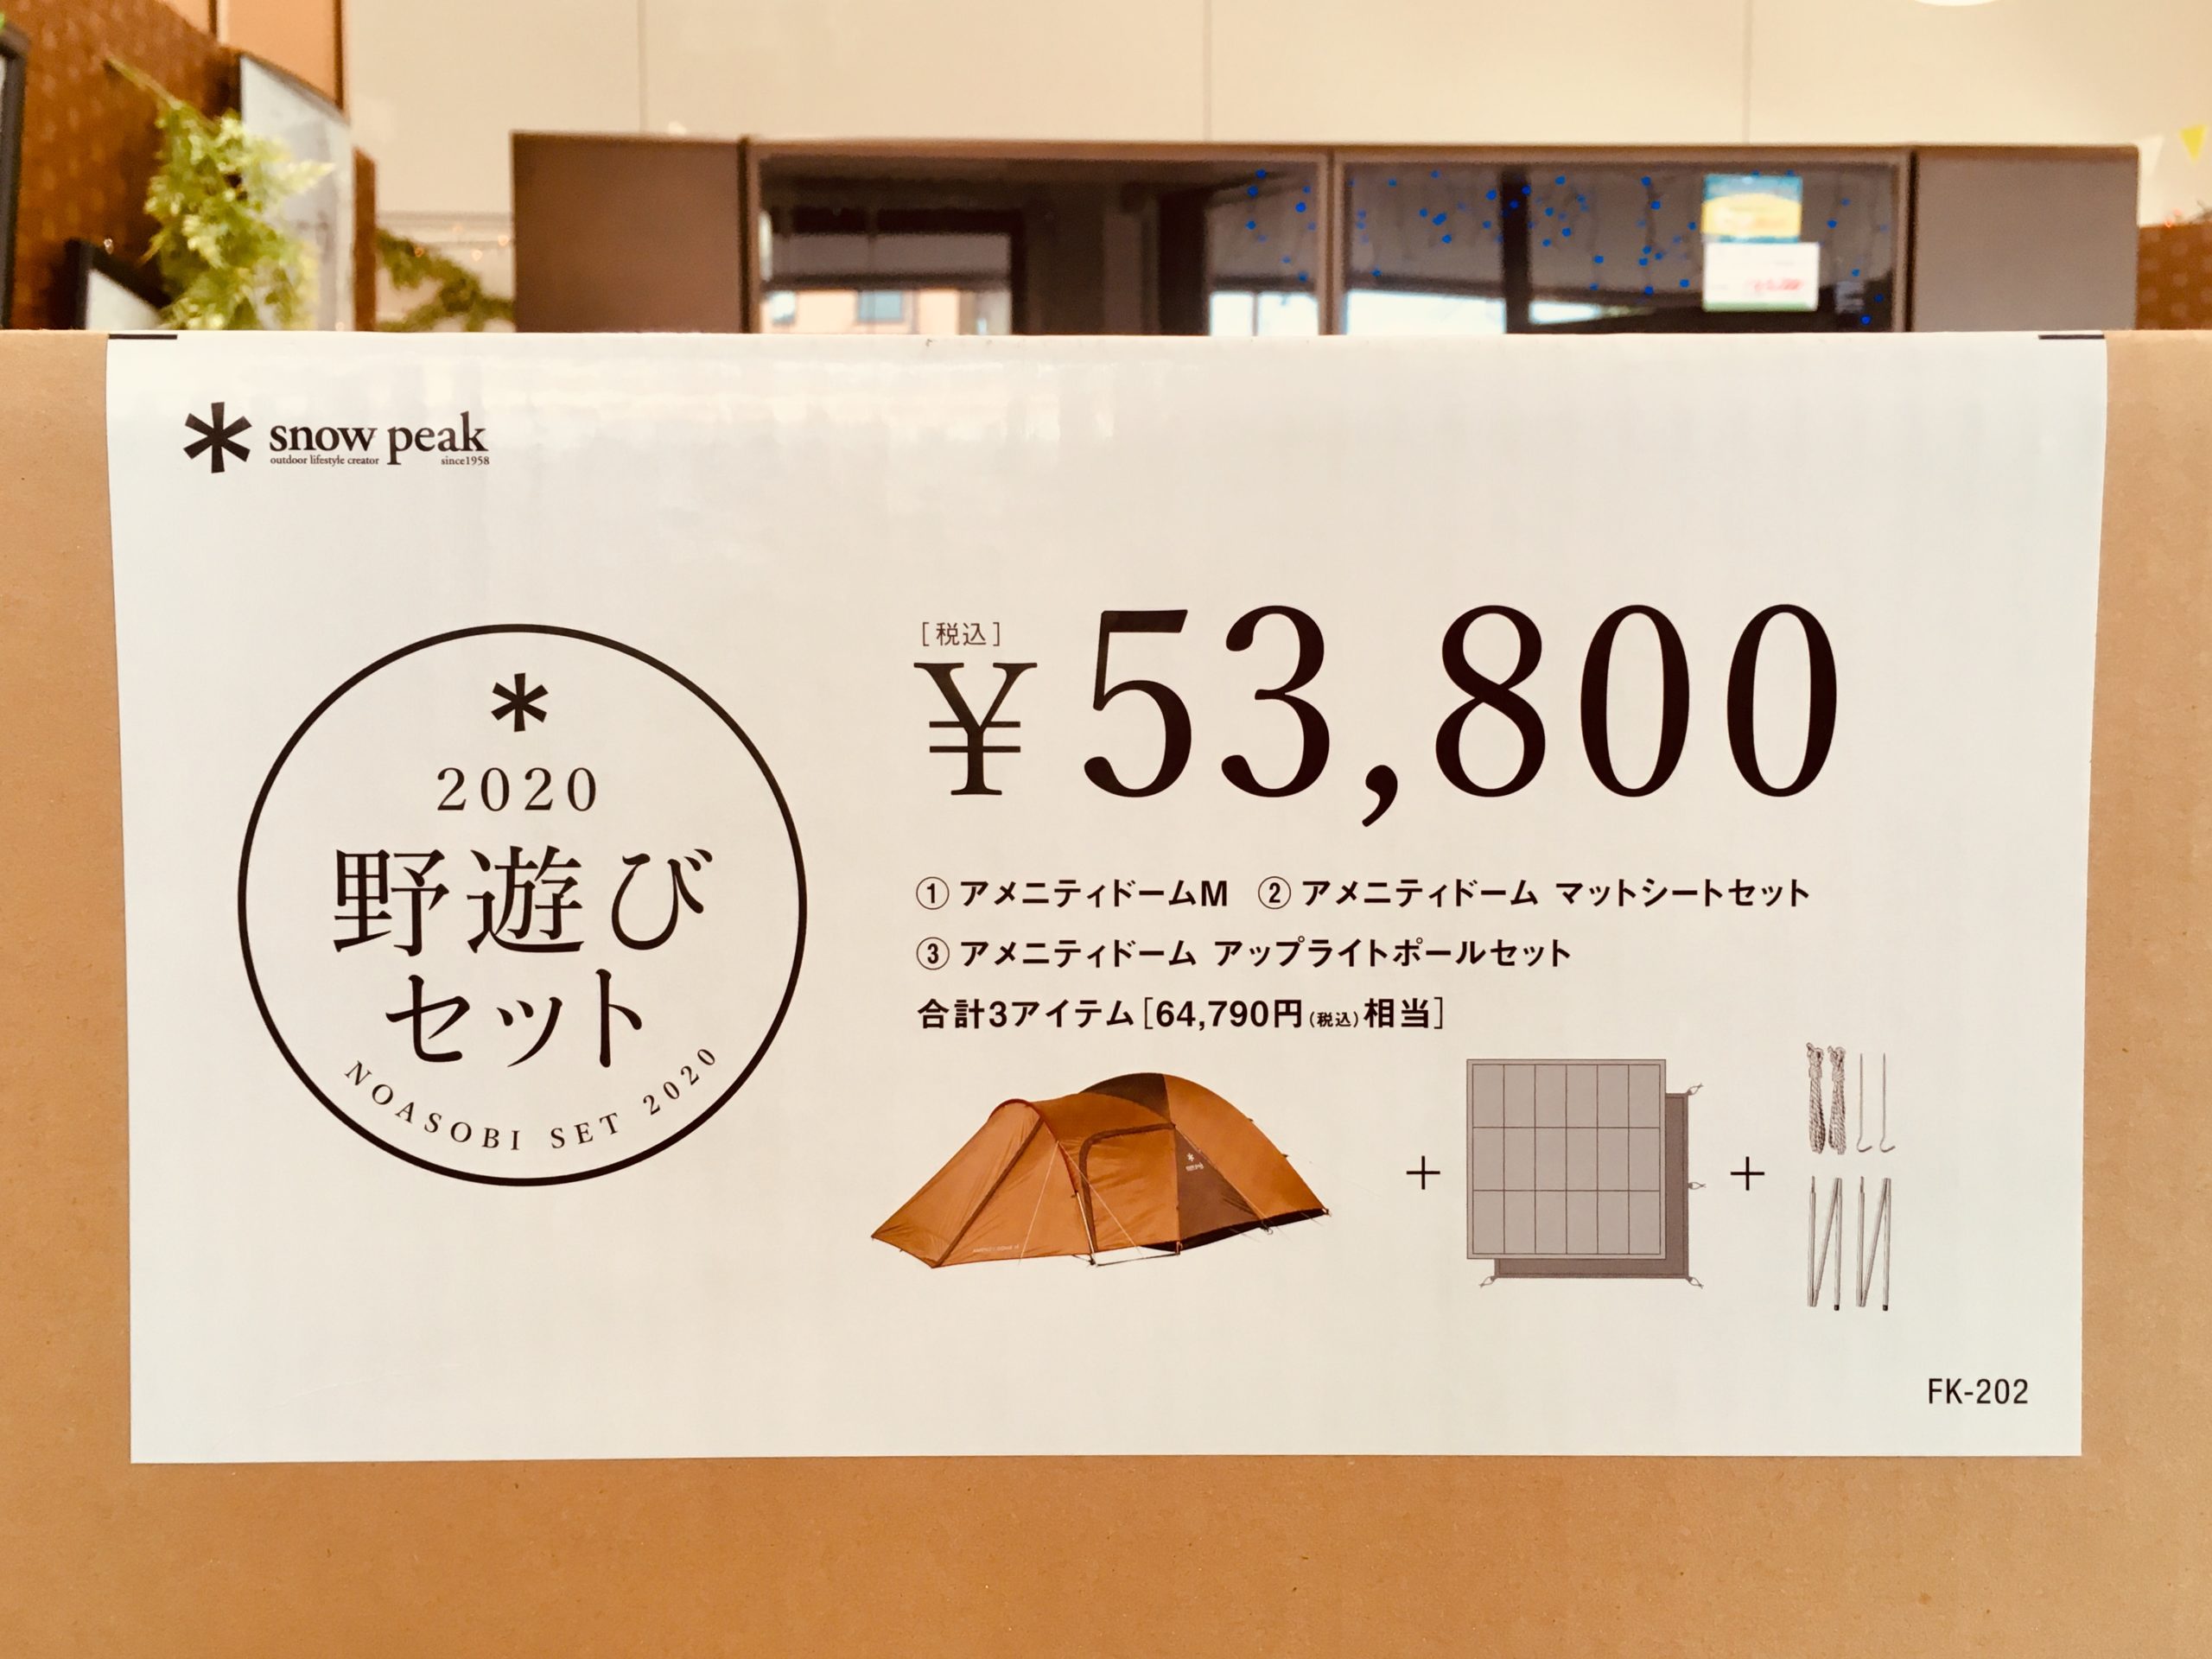 snow peak＊野遊びセット(数量限定品)買取しました！ | 愛知と岐阜のリサイクルショップ 再良市場